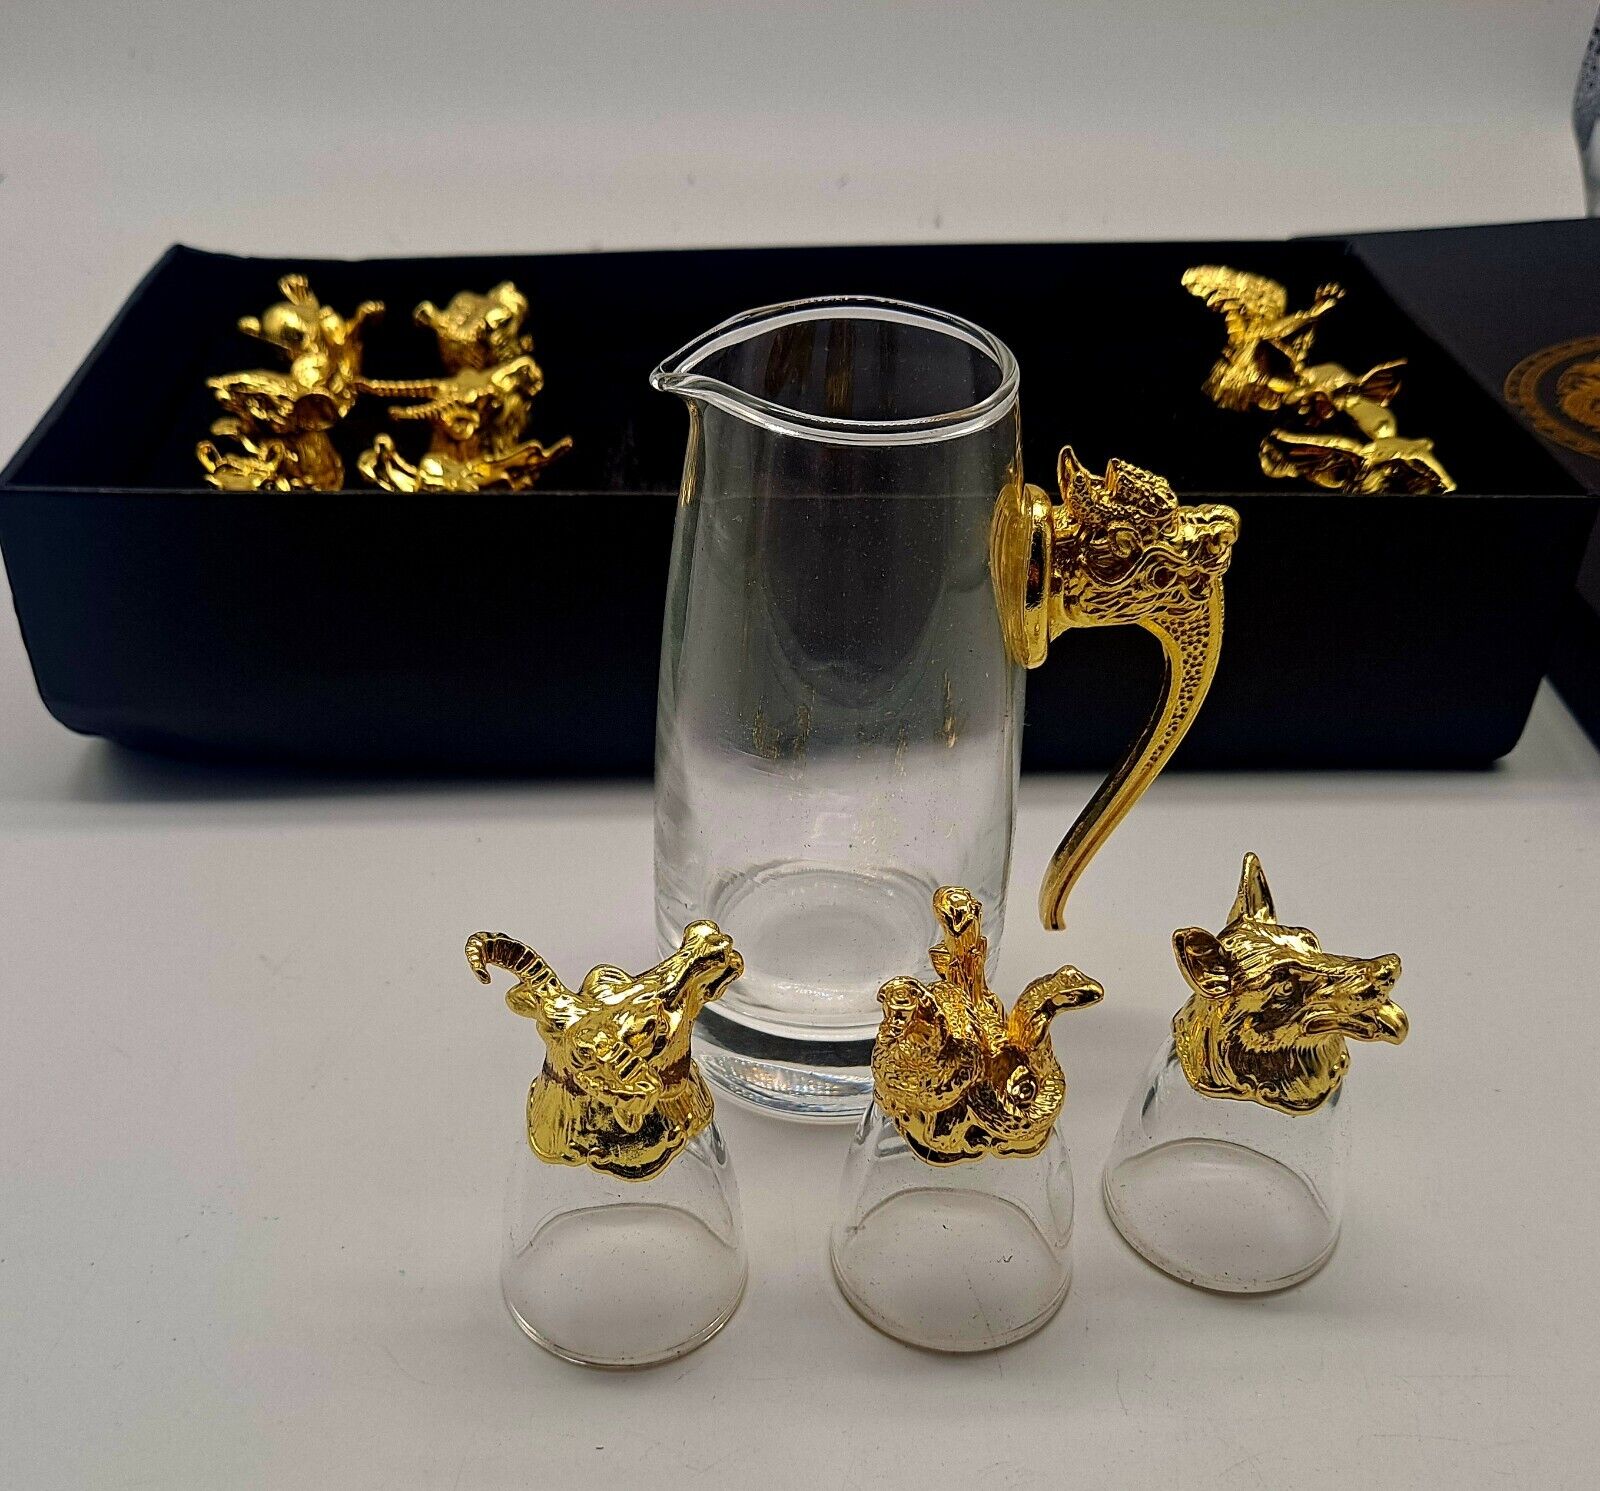 Chinese Zodiac 12 Kind of Shot Glass & Decanter Liquor Sake w/ Original box